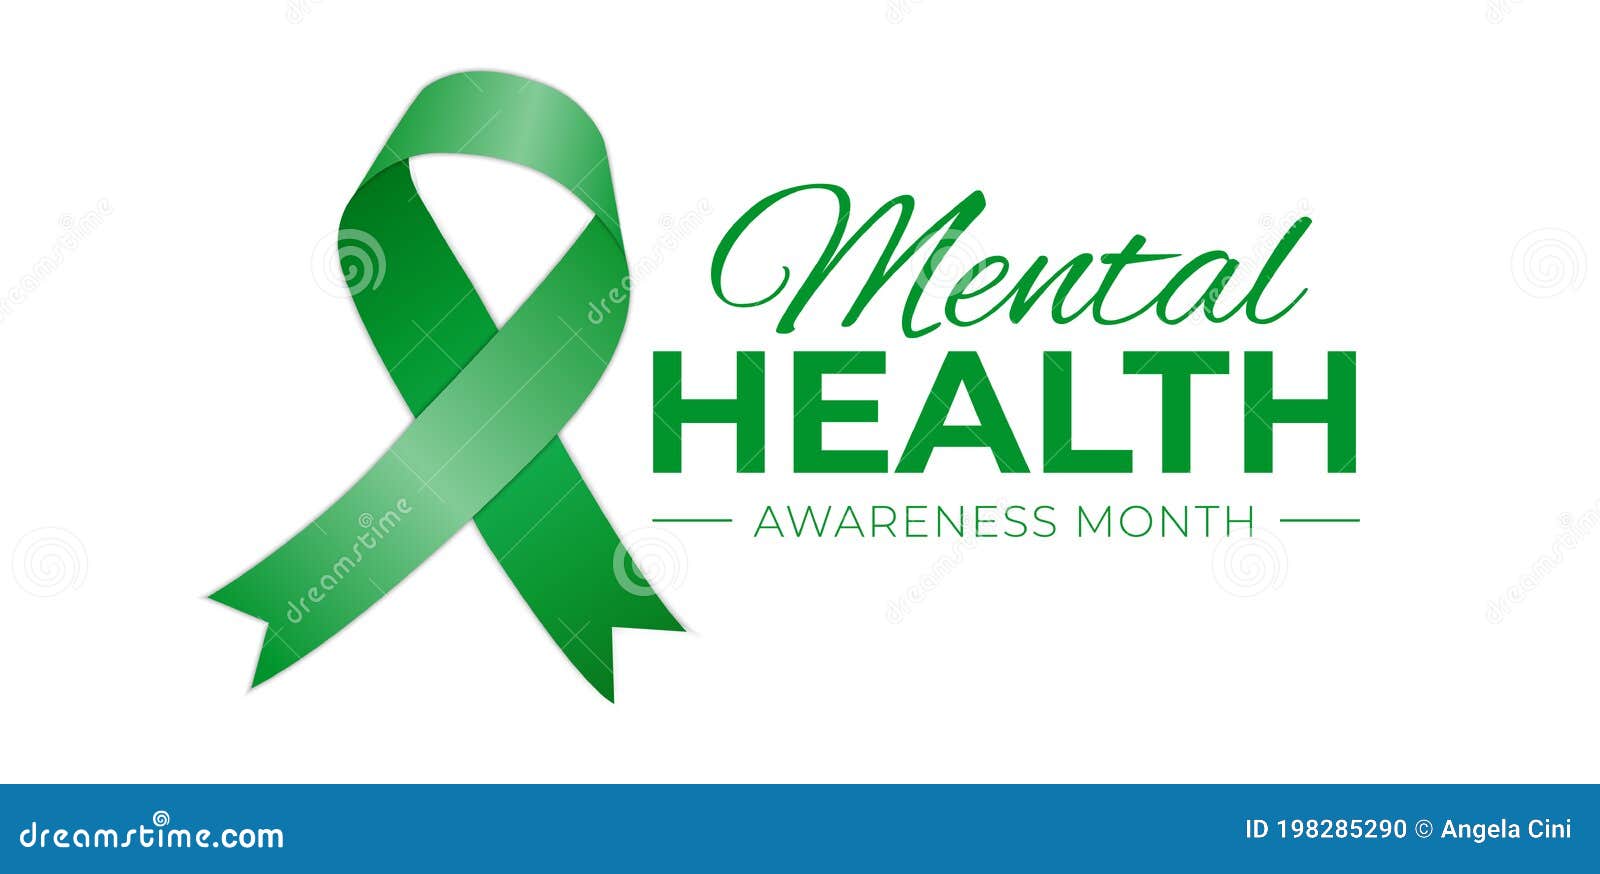 mental health awareness month logo icon on white background